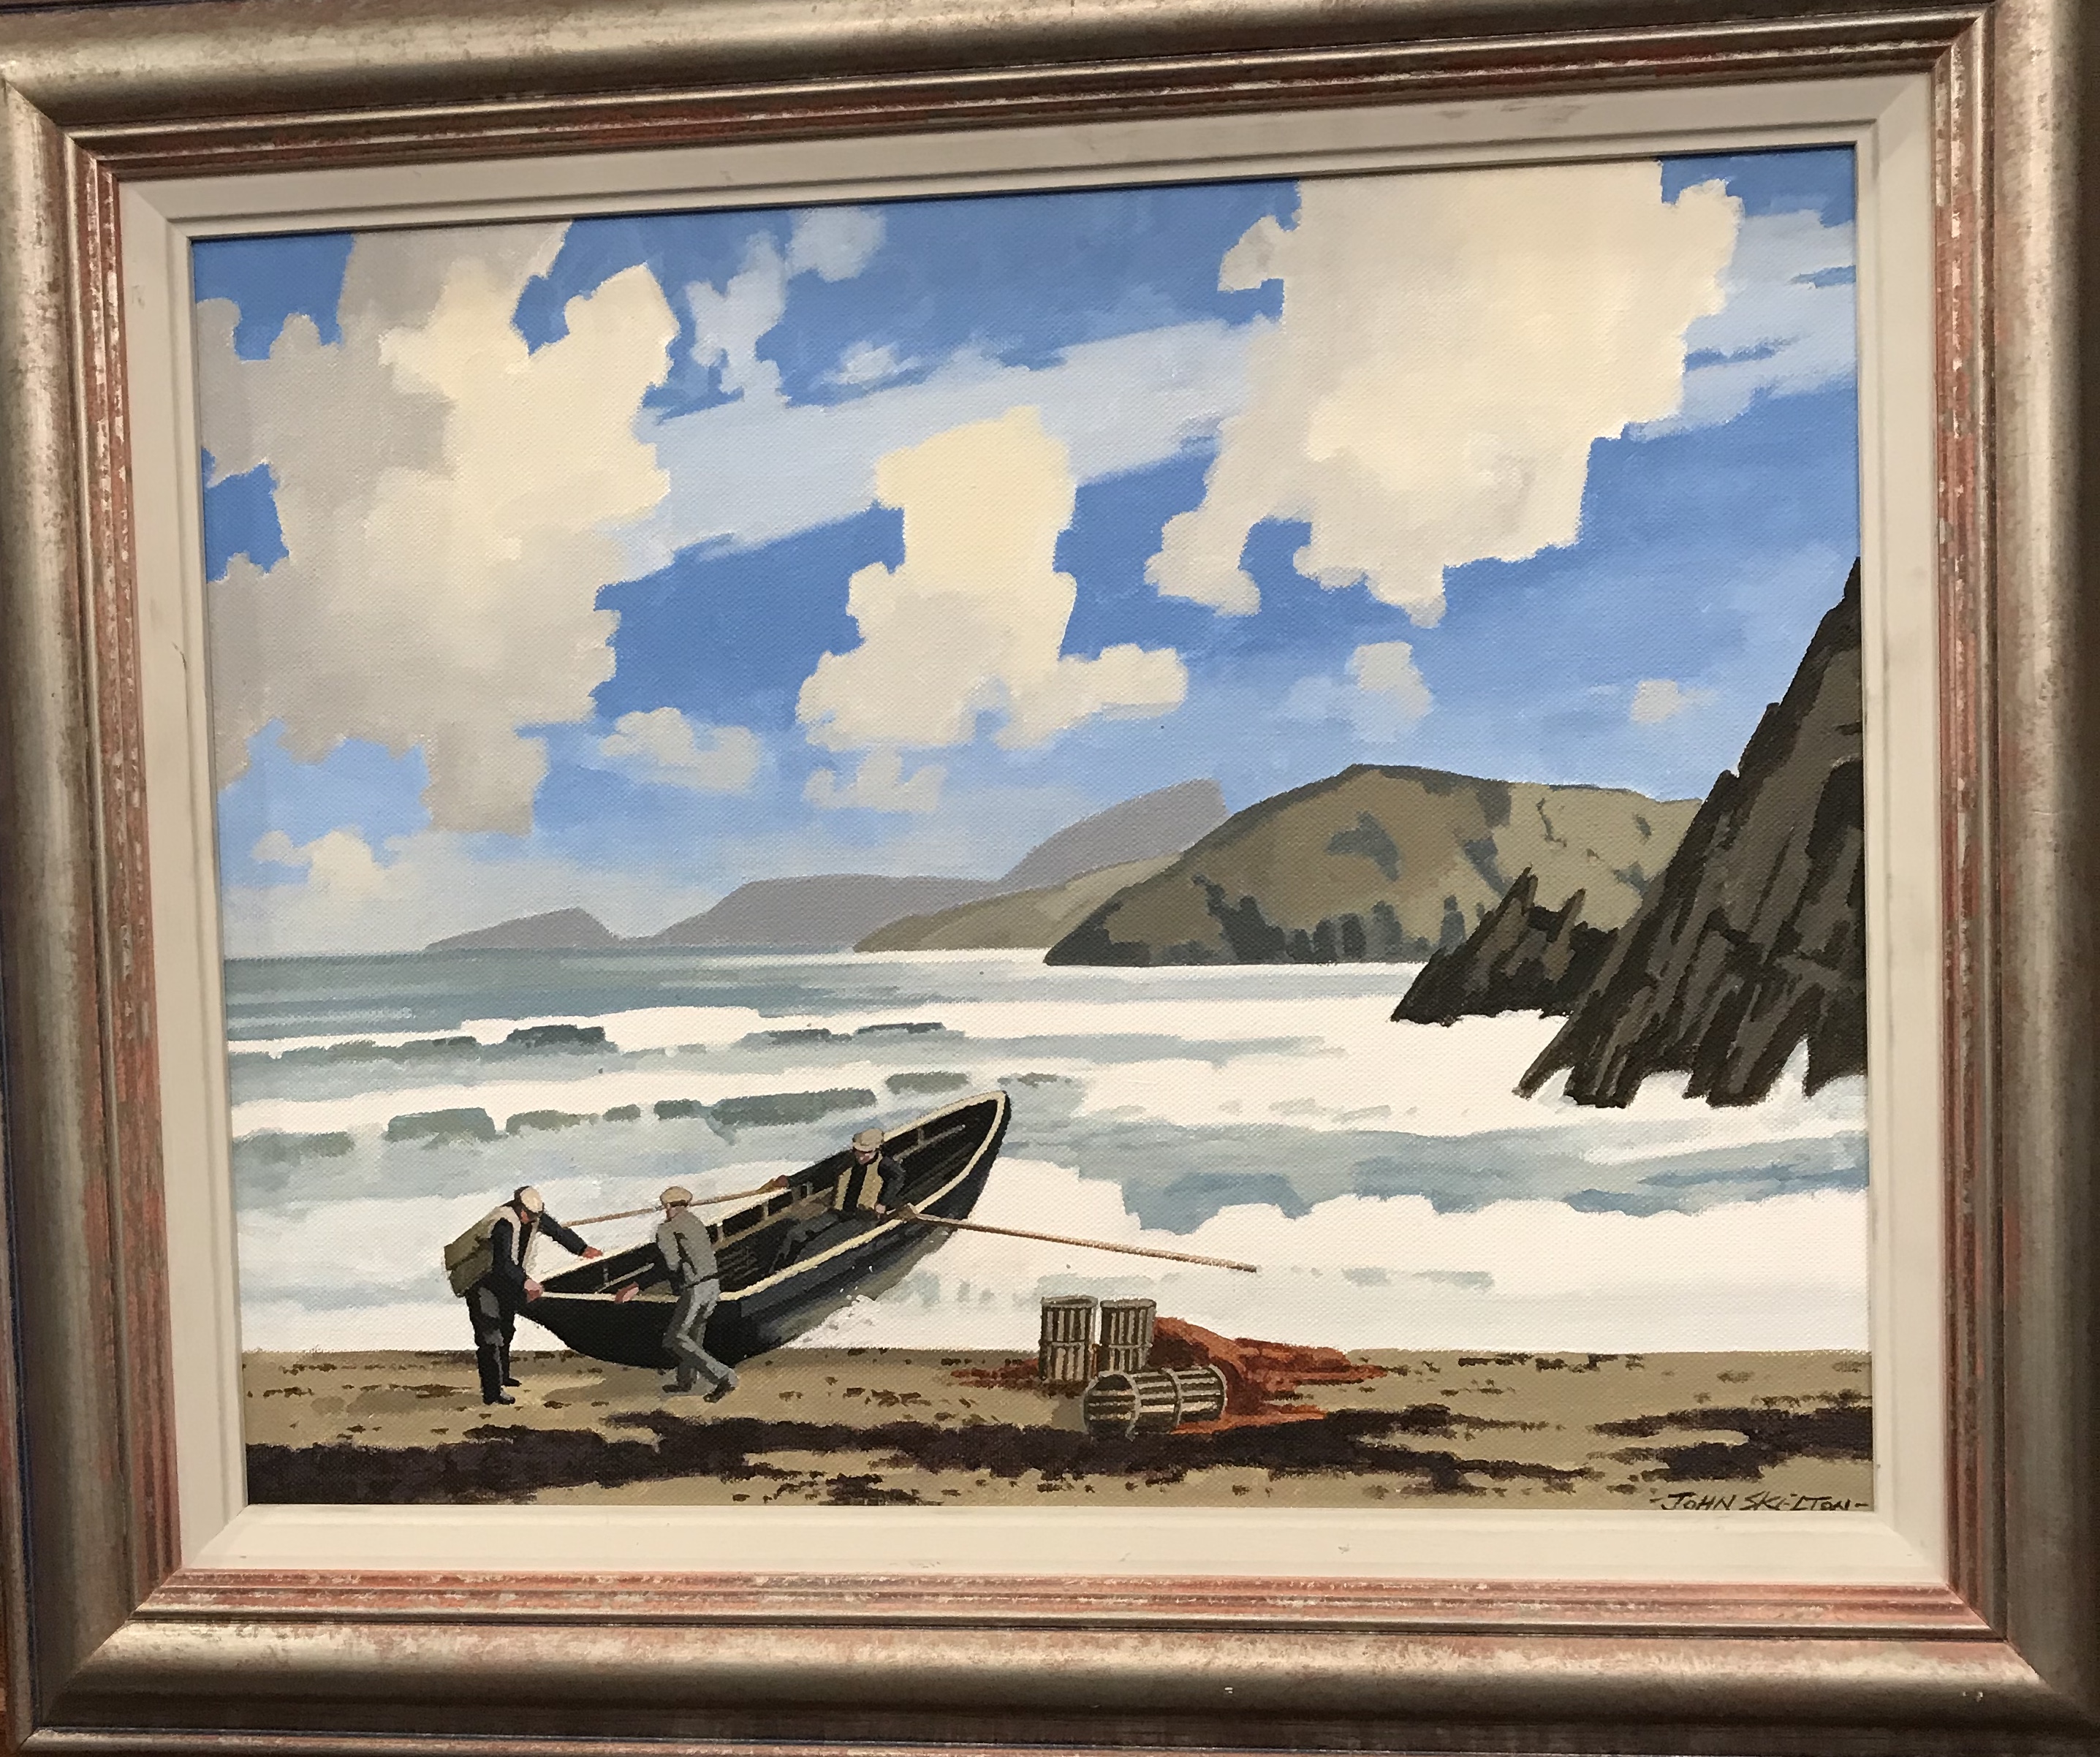 John Skelton Blasket Island Wave Oil On Canvas (1923-2009)